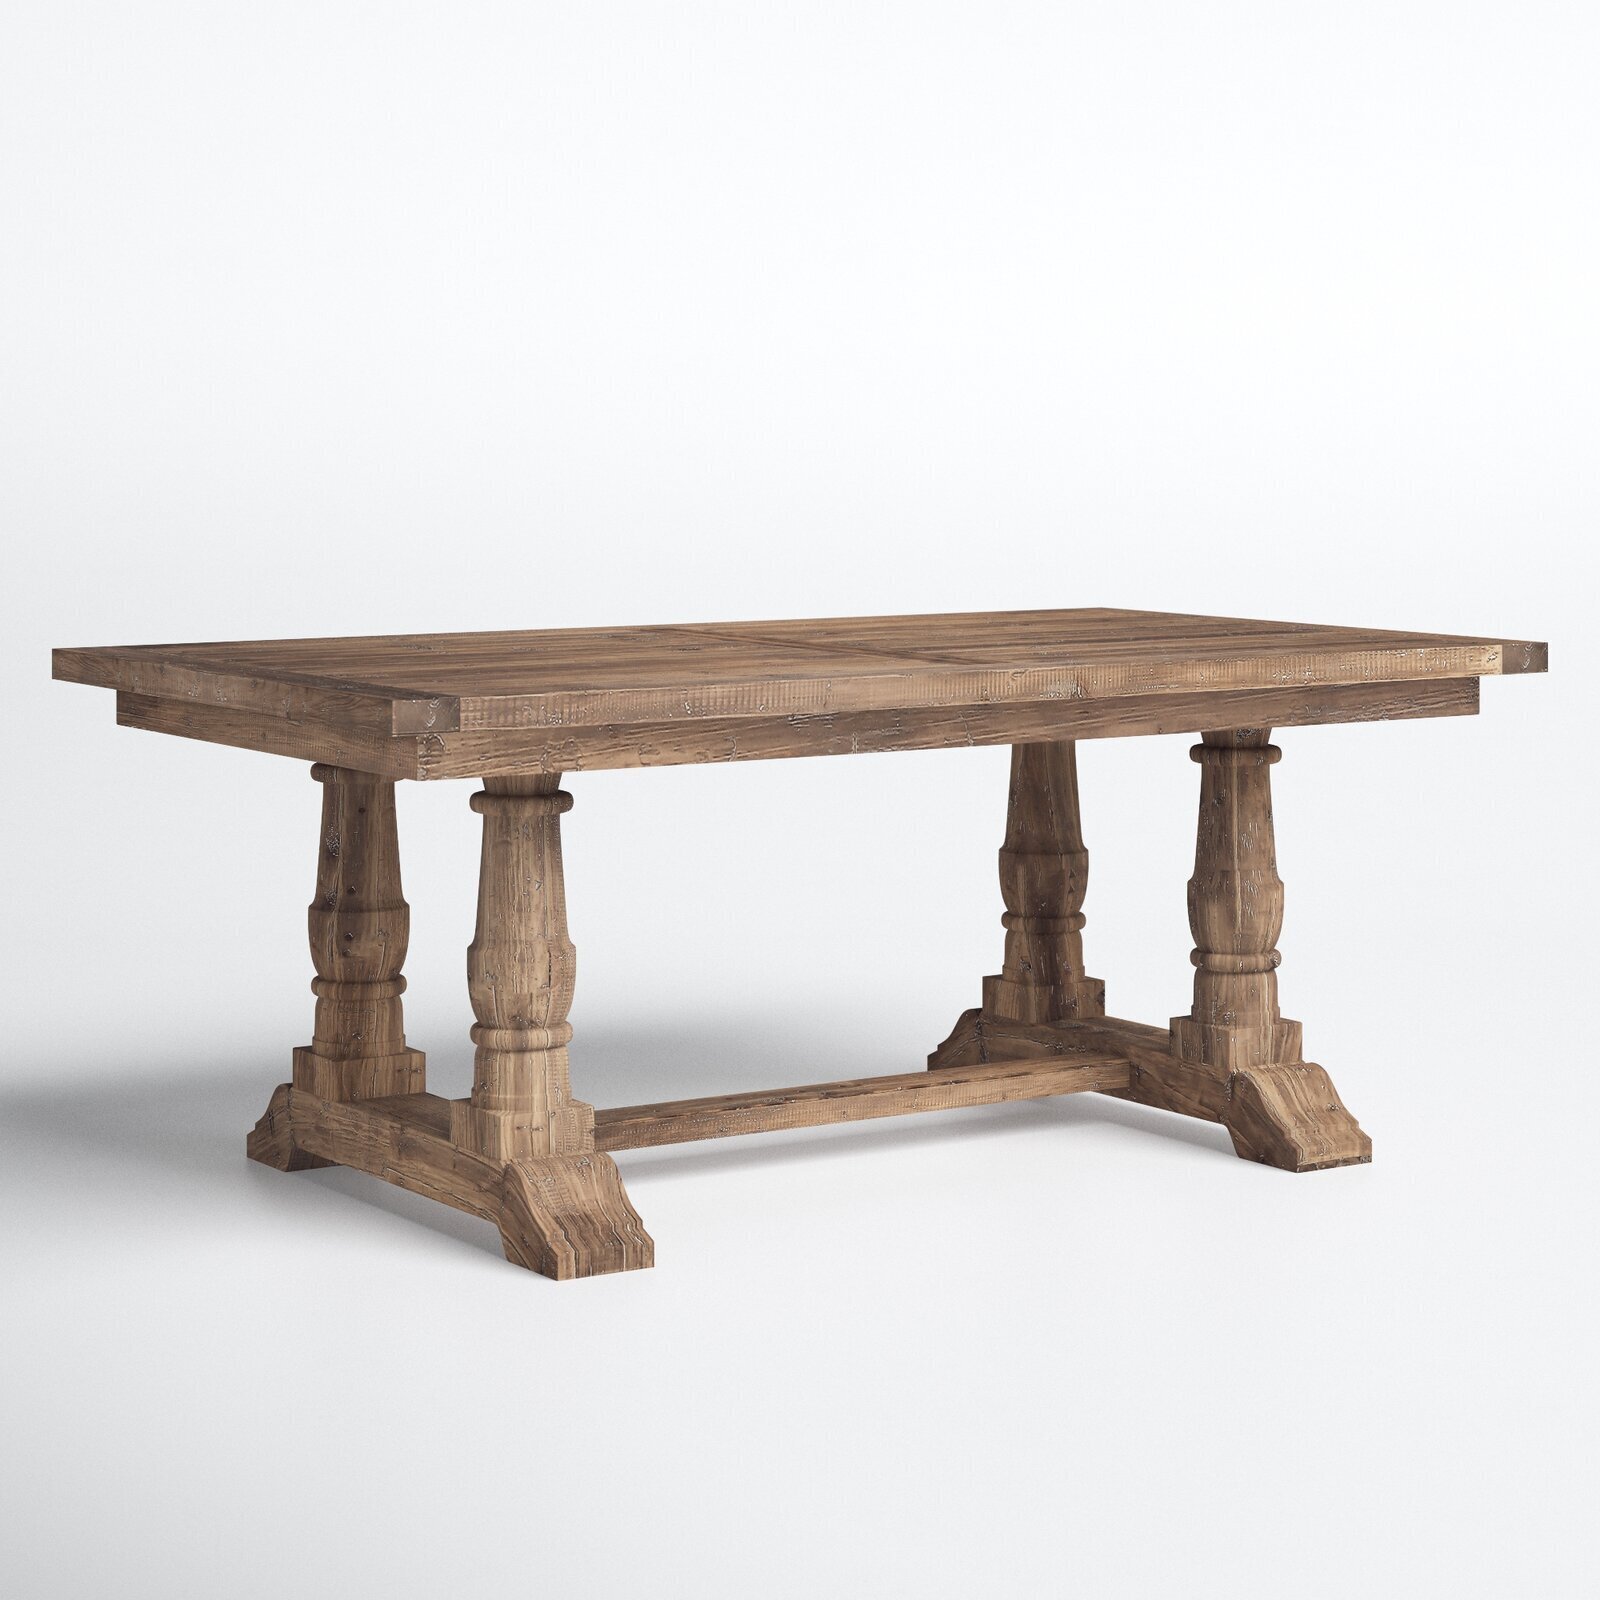 Ornate craftsman dining room table